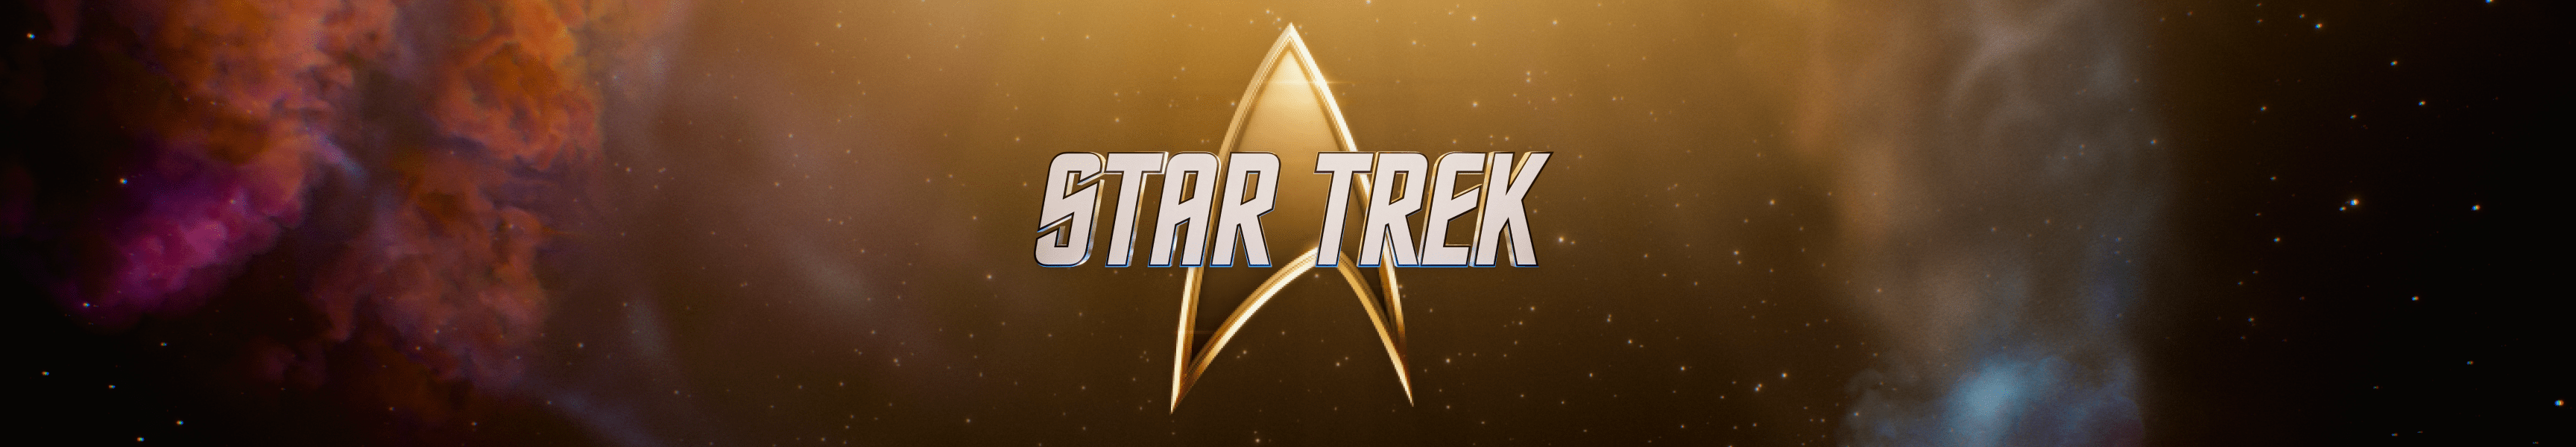 Star Trek Dekorationen